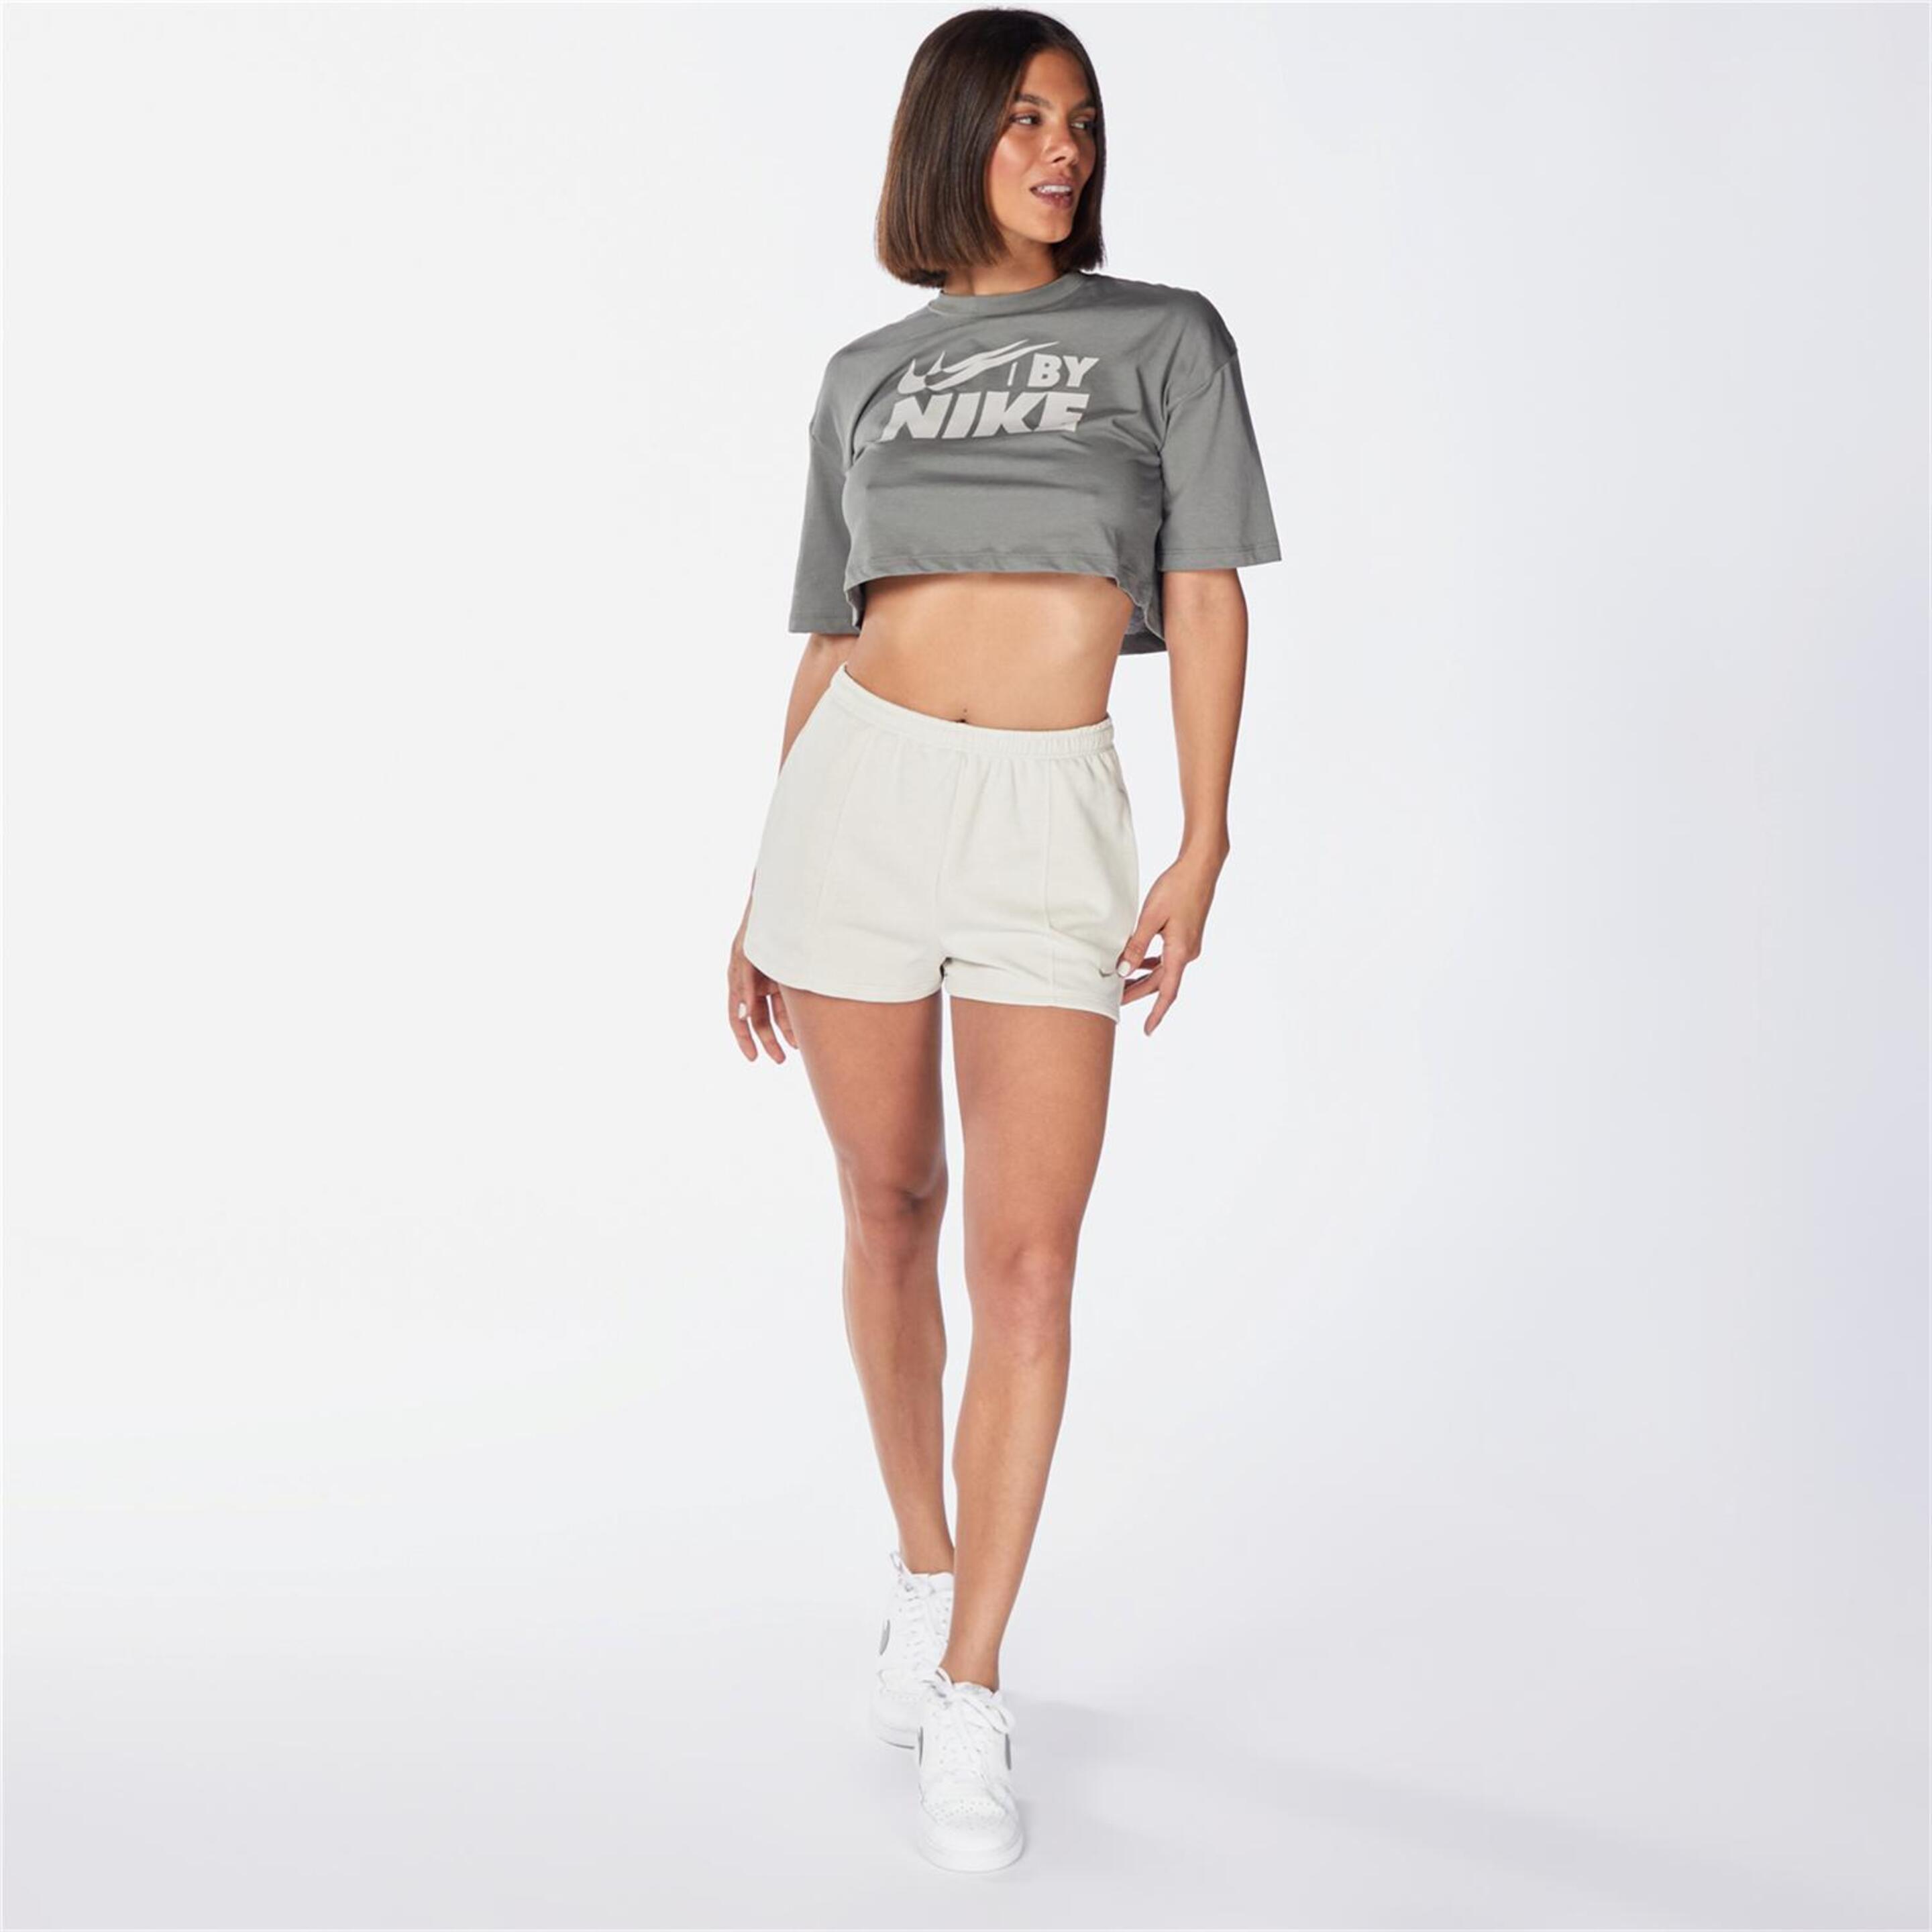 Pantalón Nike - Marrón - Short Mujer